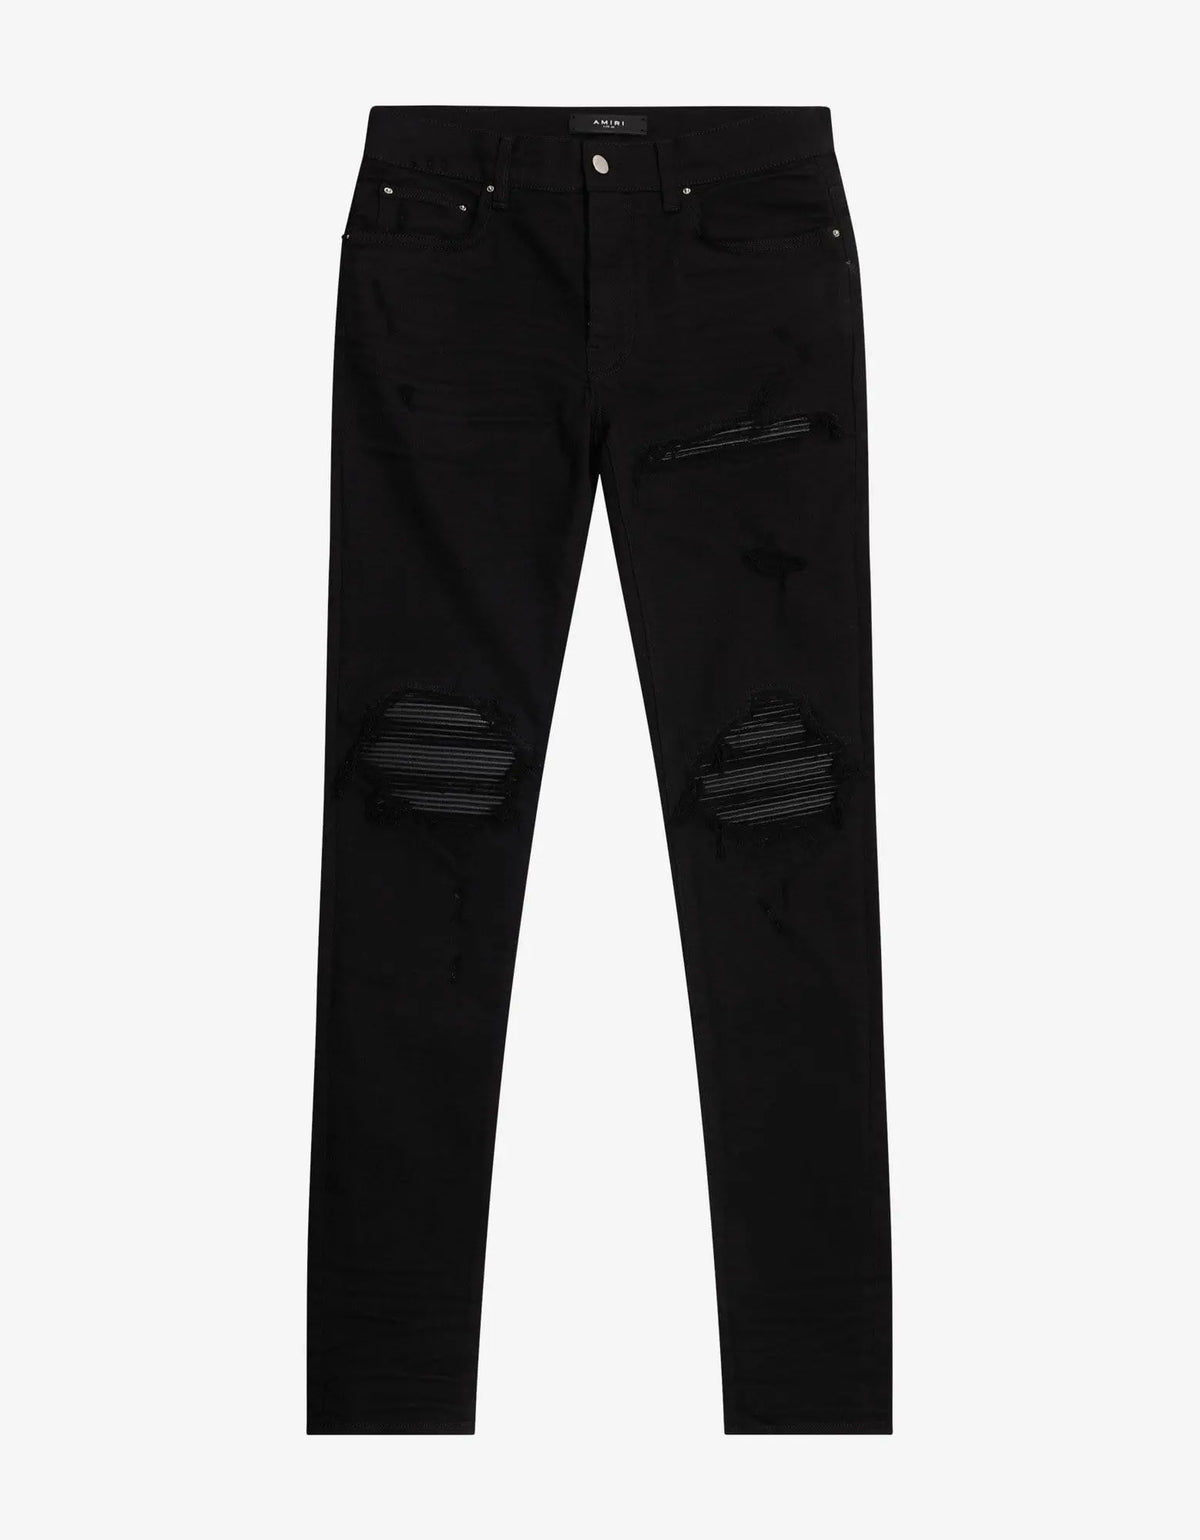 Amiri Jeans MX1 Black Leather Insert Distressed Skinny